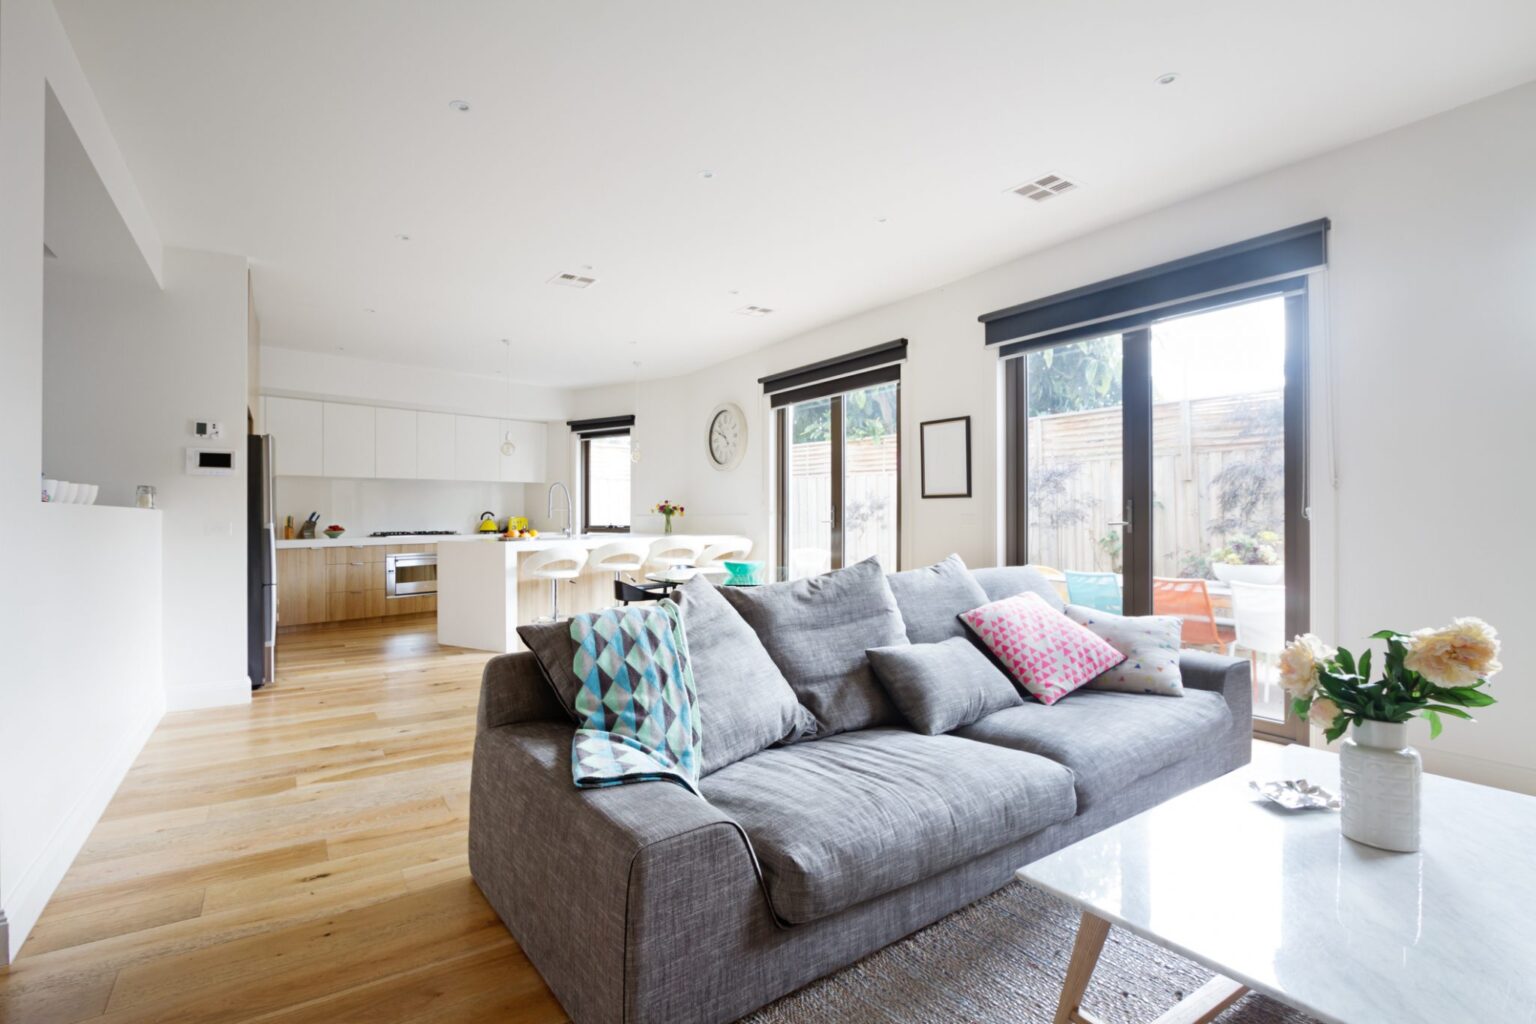 A sleek modern apartment with contemporary decor